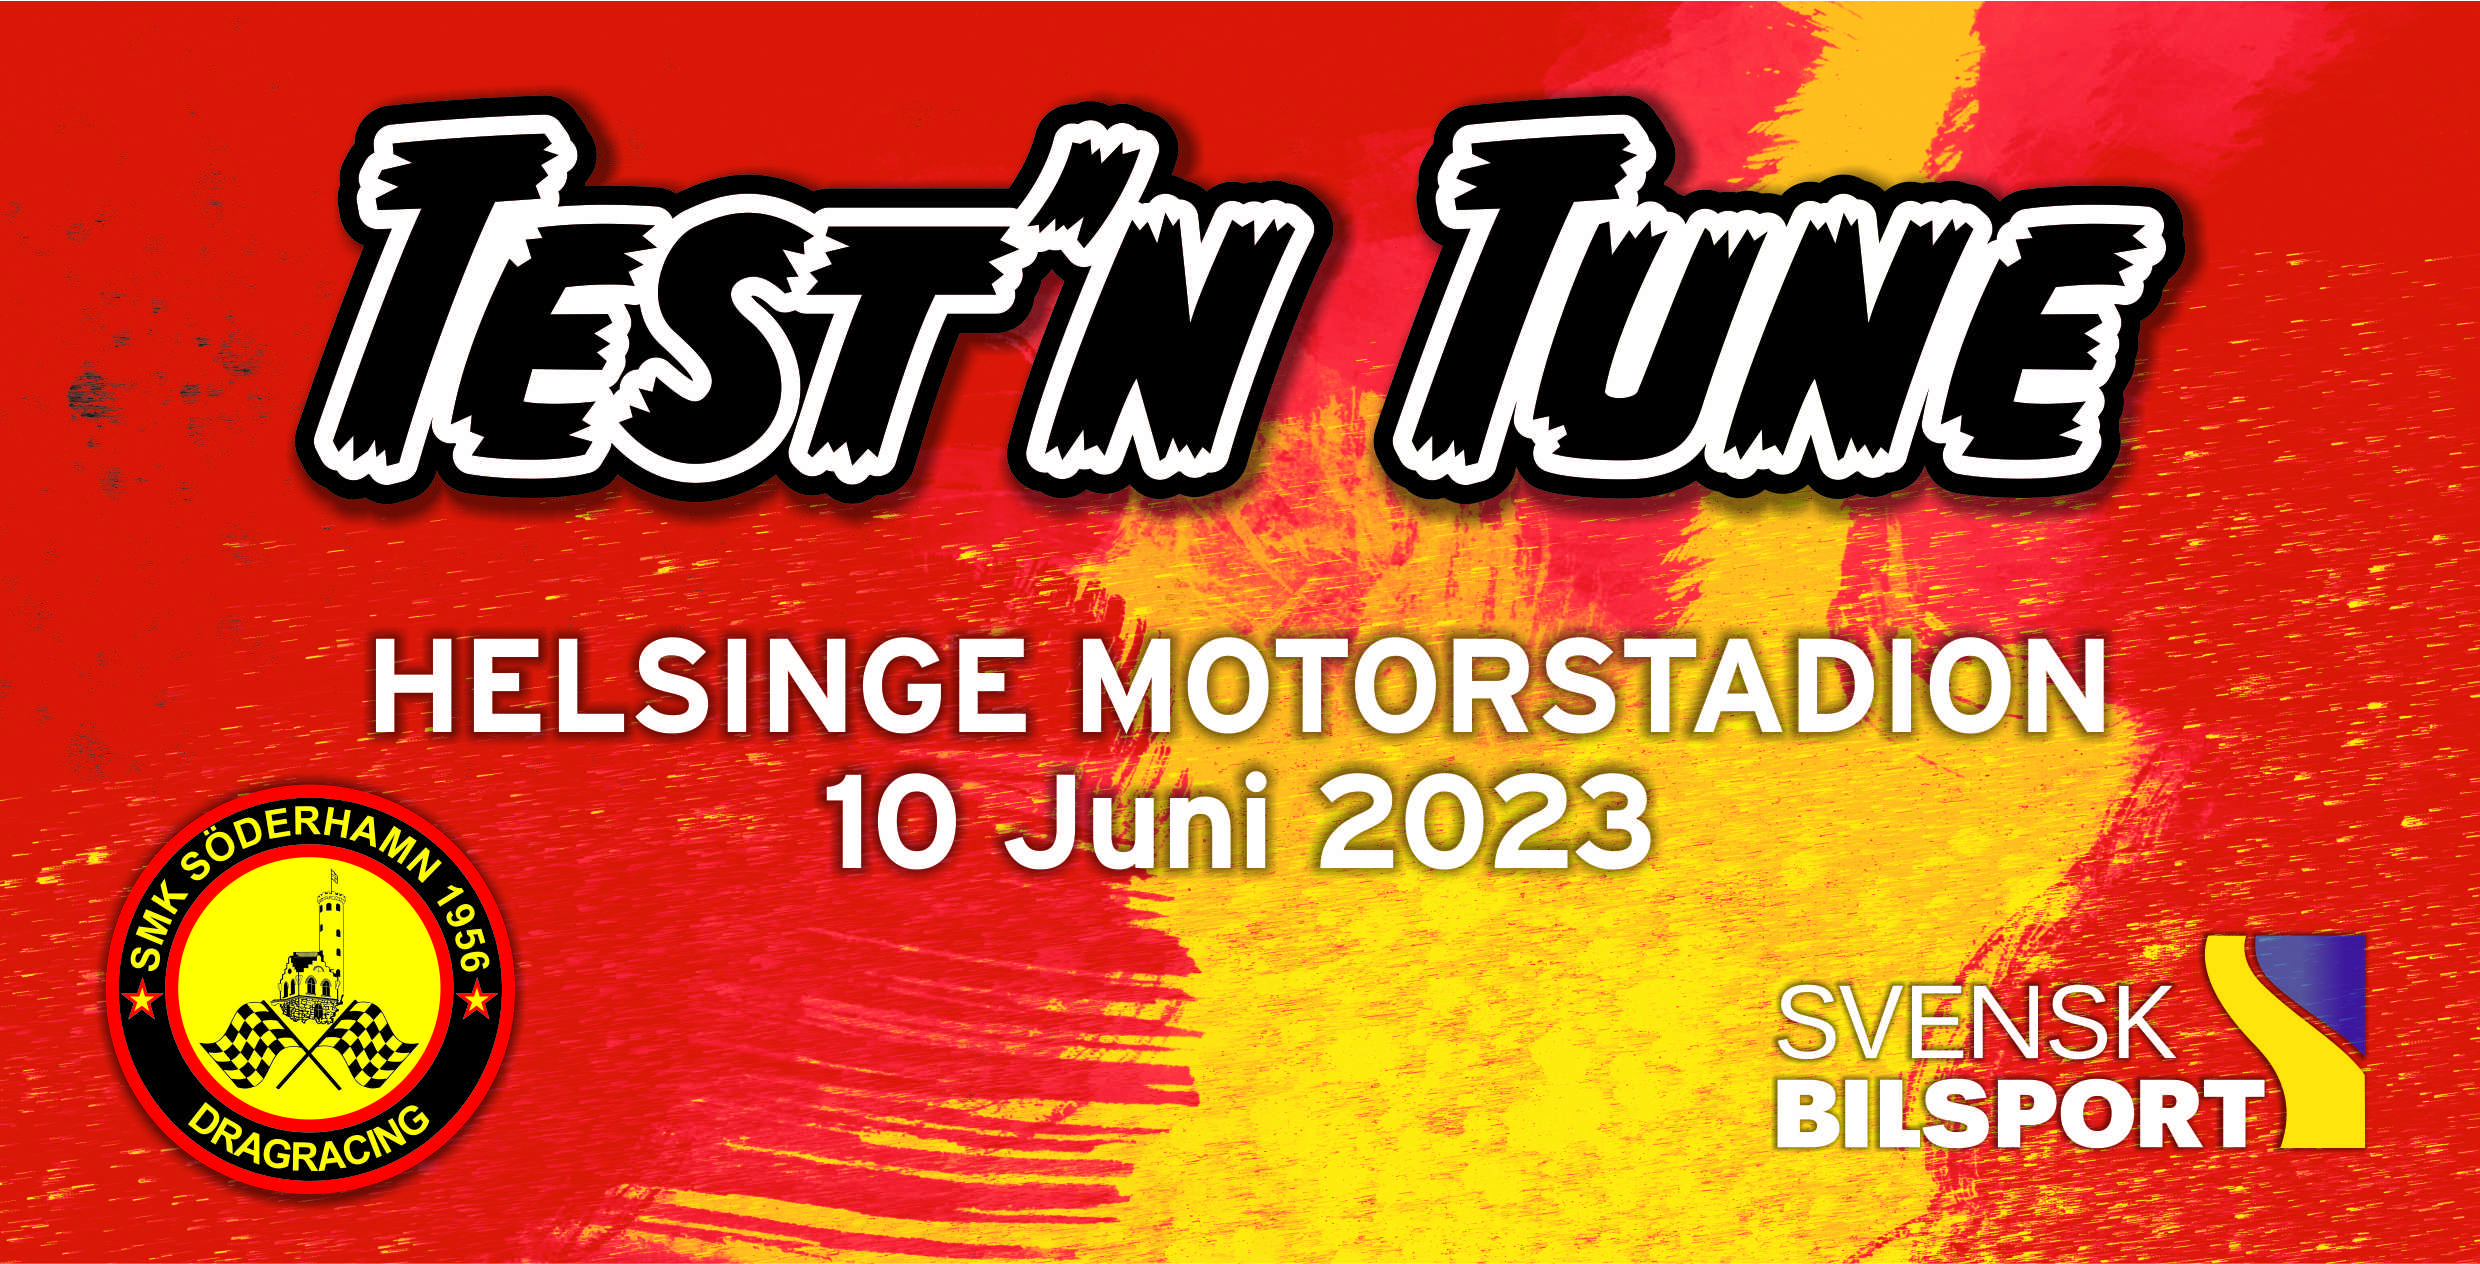 Test & Tune Söderhamn 10 Juni 2023